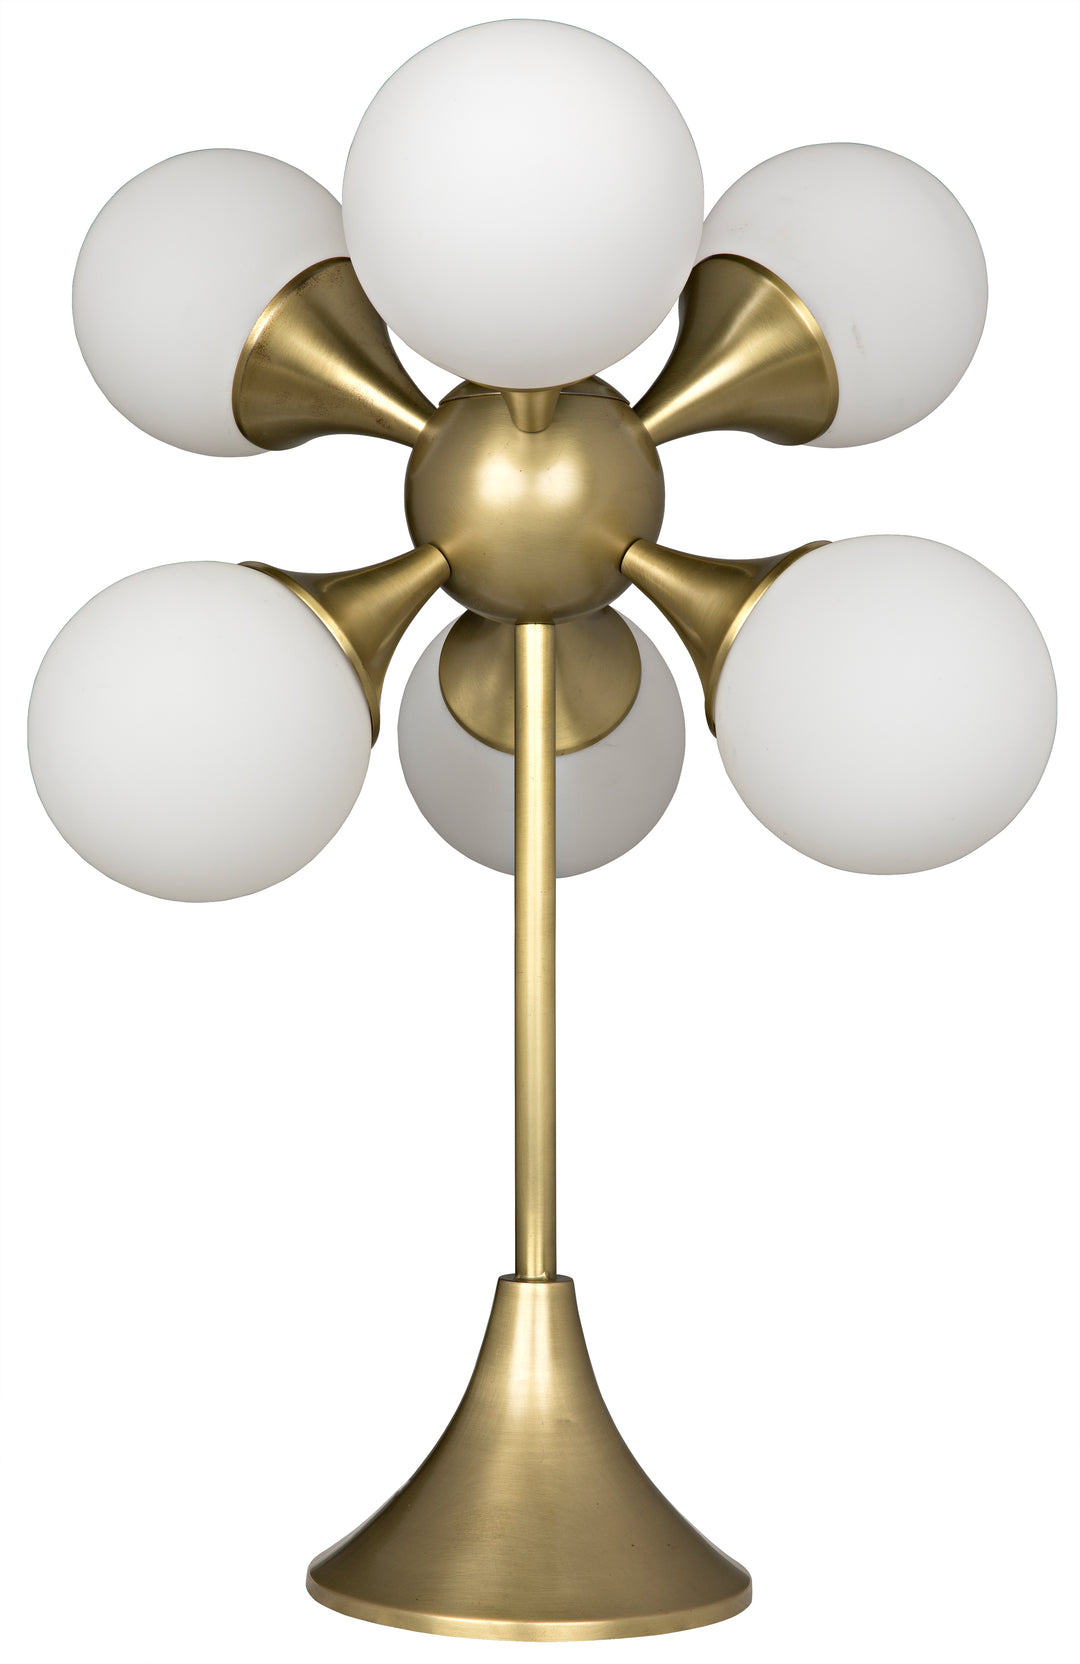 Globular Table Lamp, Metal with Brass Finish